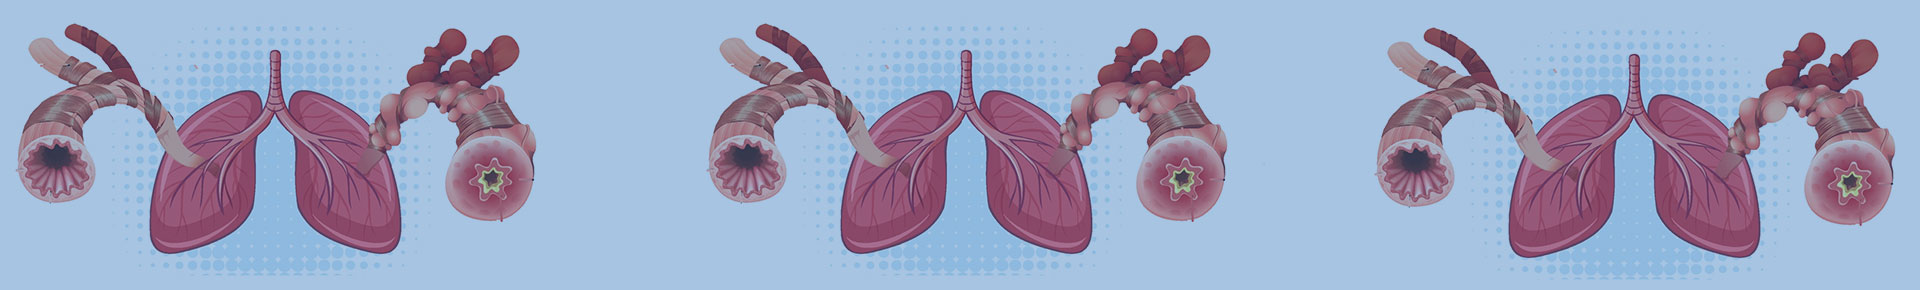 asthma-banner